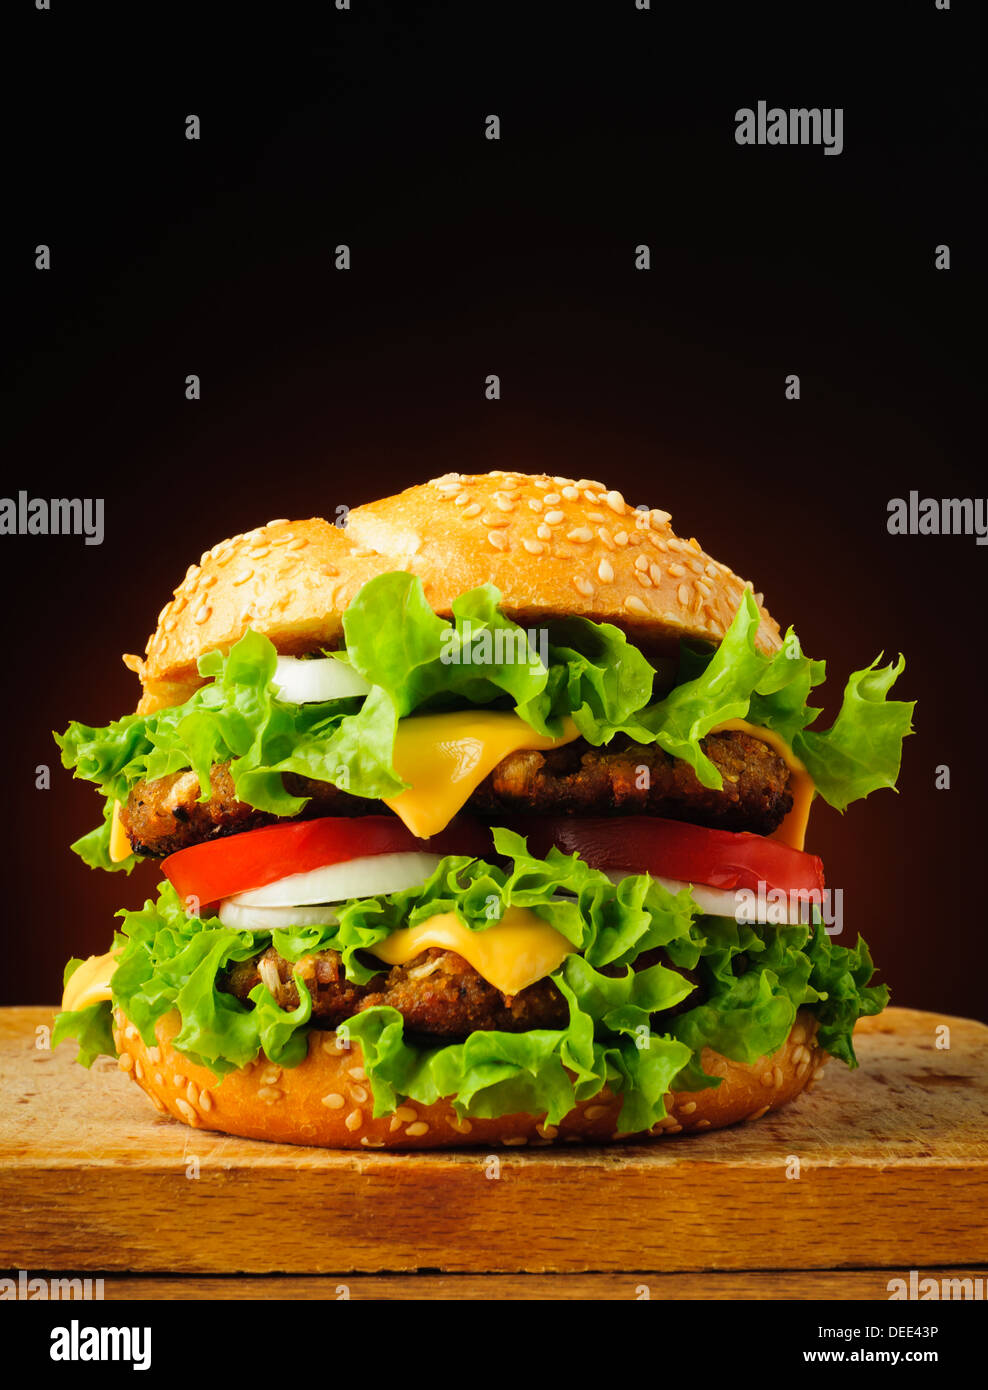 Comida rápida con gran sabroso tradicional hamburguesa o hamburguesa doble Foto de stock